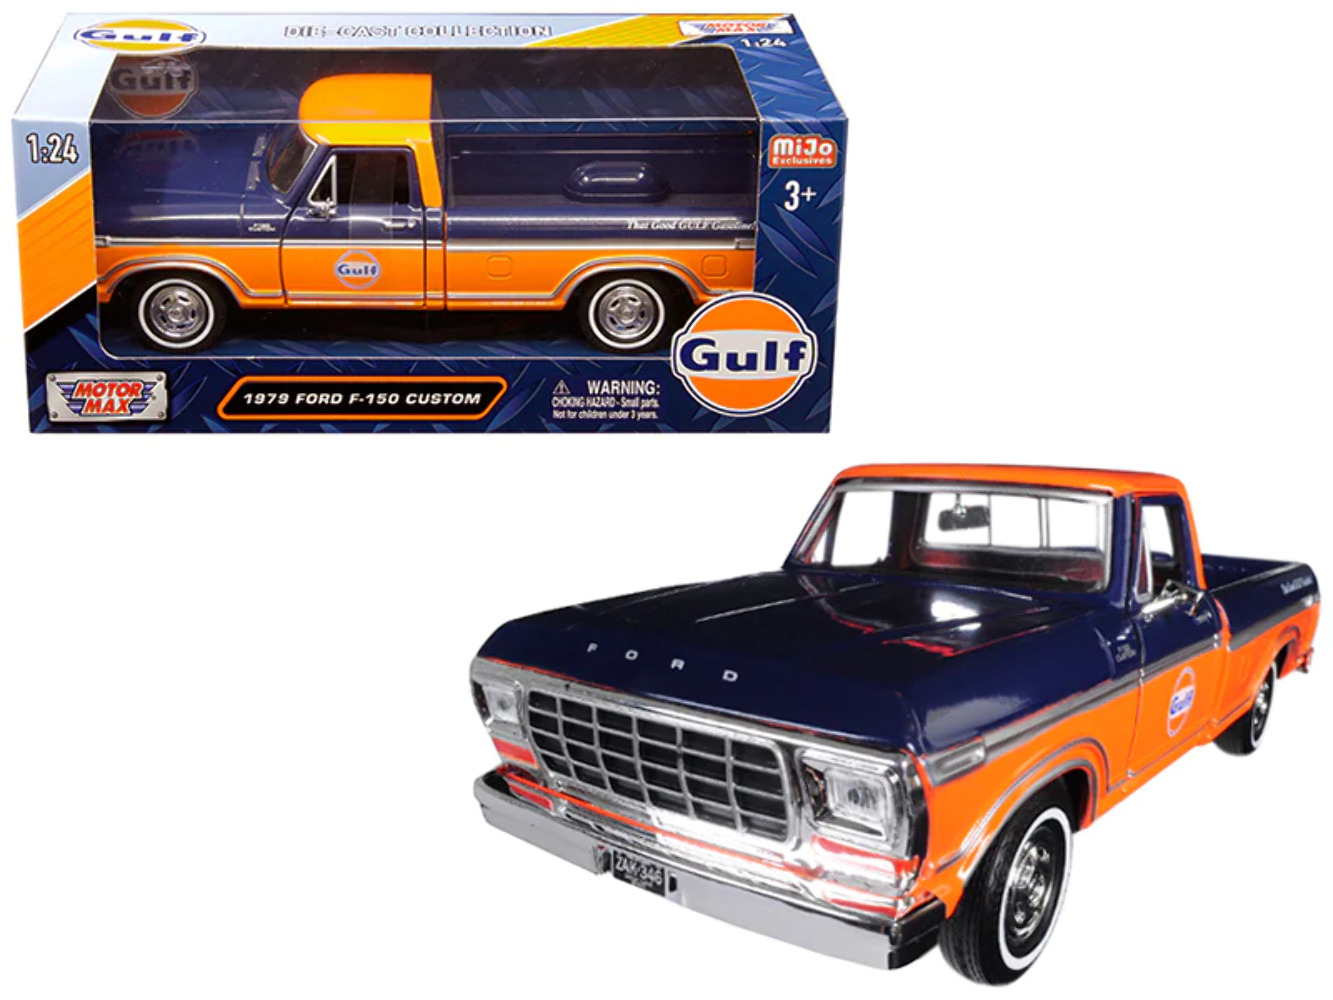 1979 Ford -150 Custom Pickup Truck Gulf and 1/24 Diecast Model Car